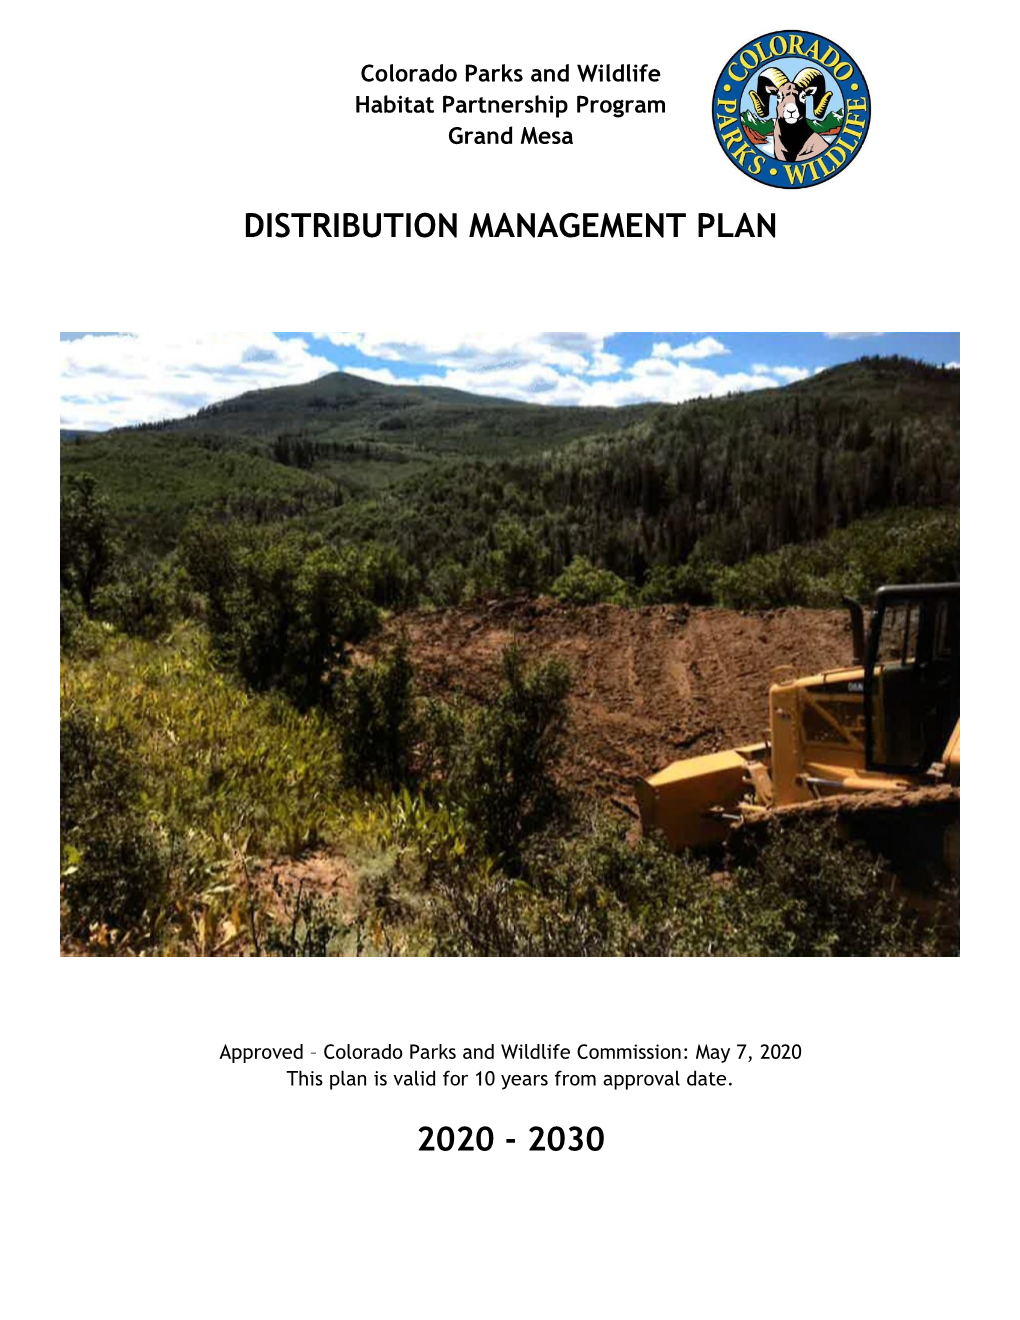 Distribution Management Plan 2020